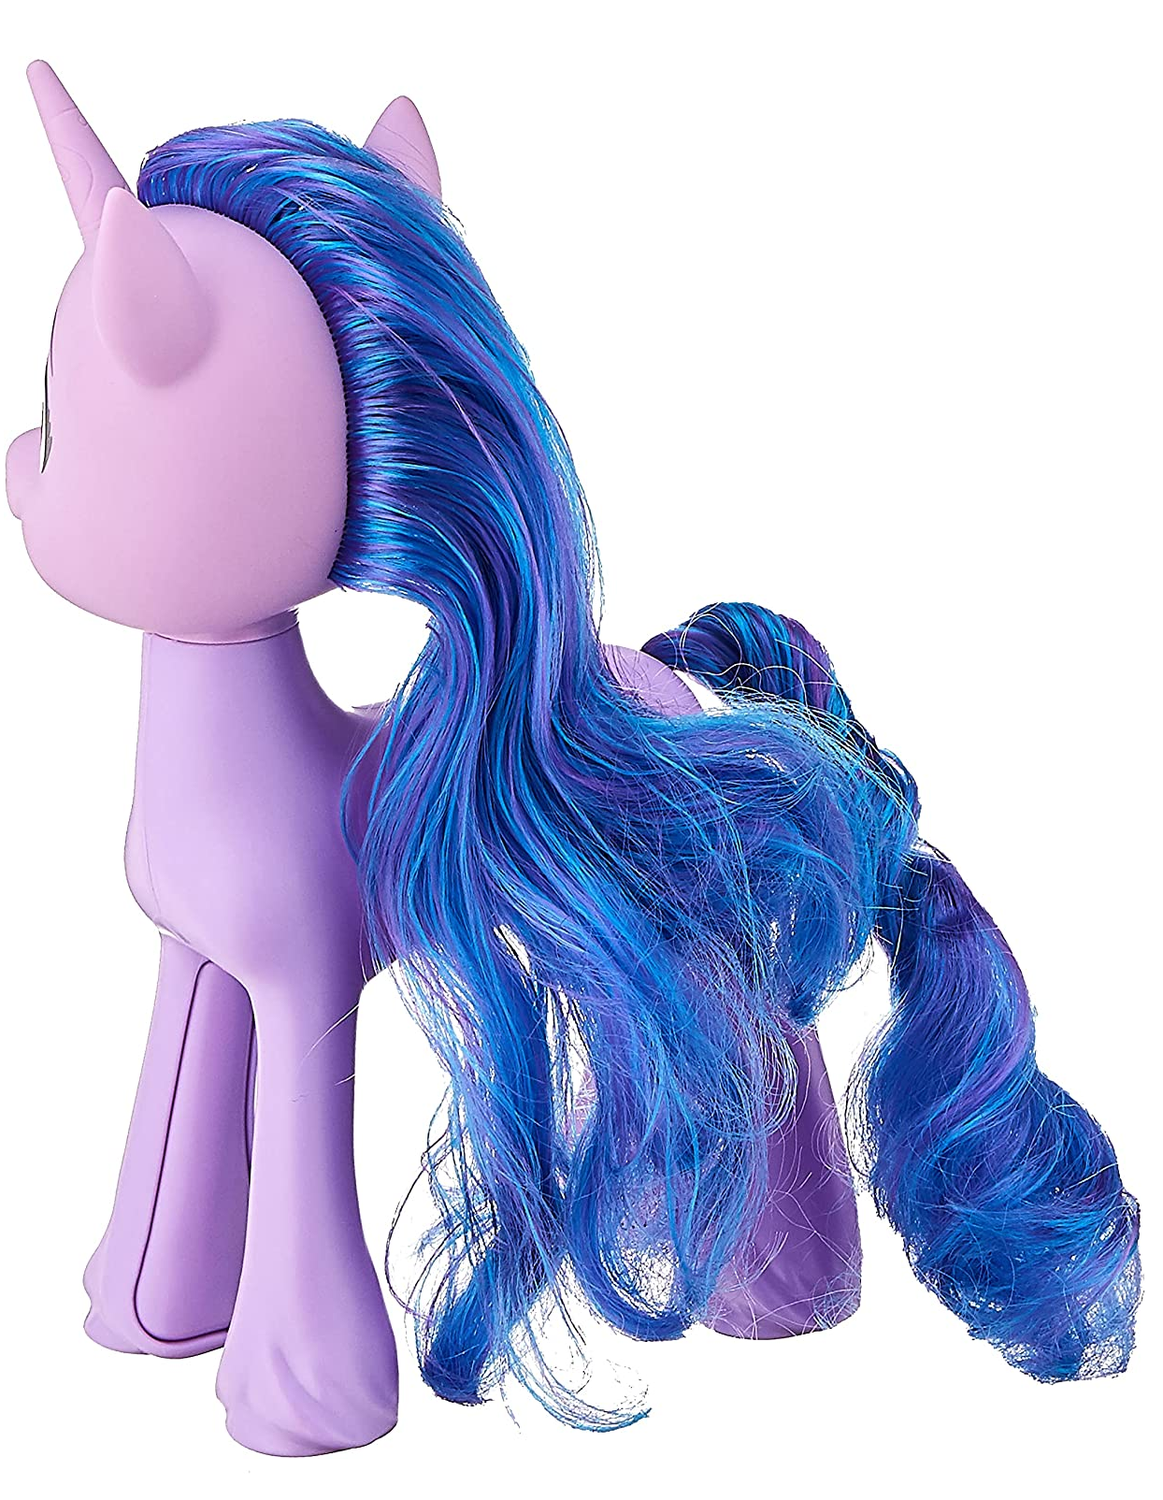 My Little Pony Figura Básica - Hasbro